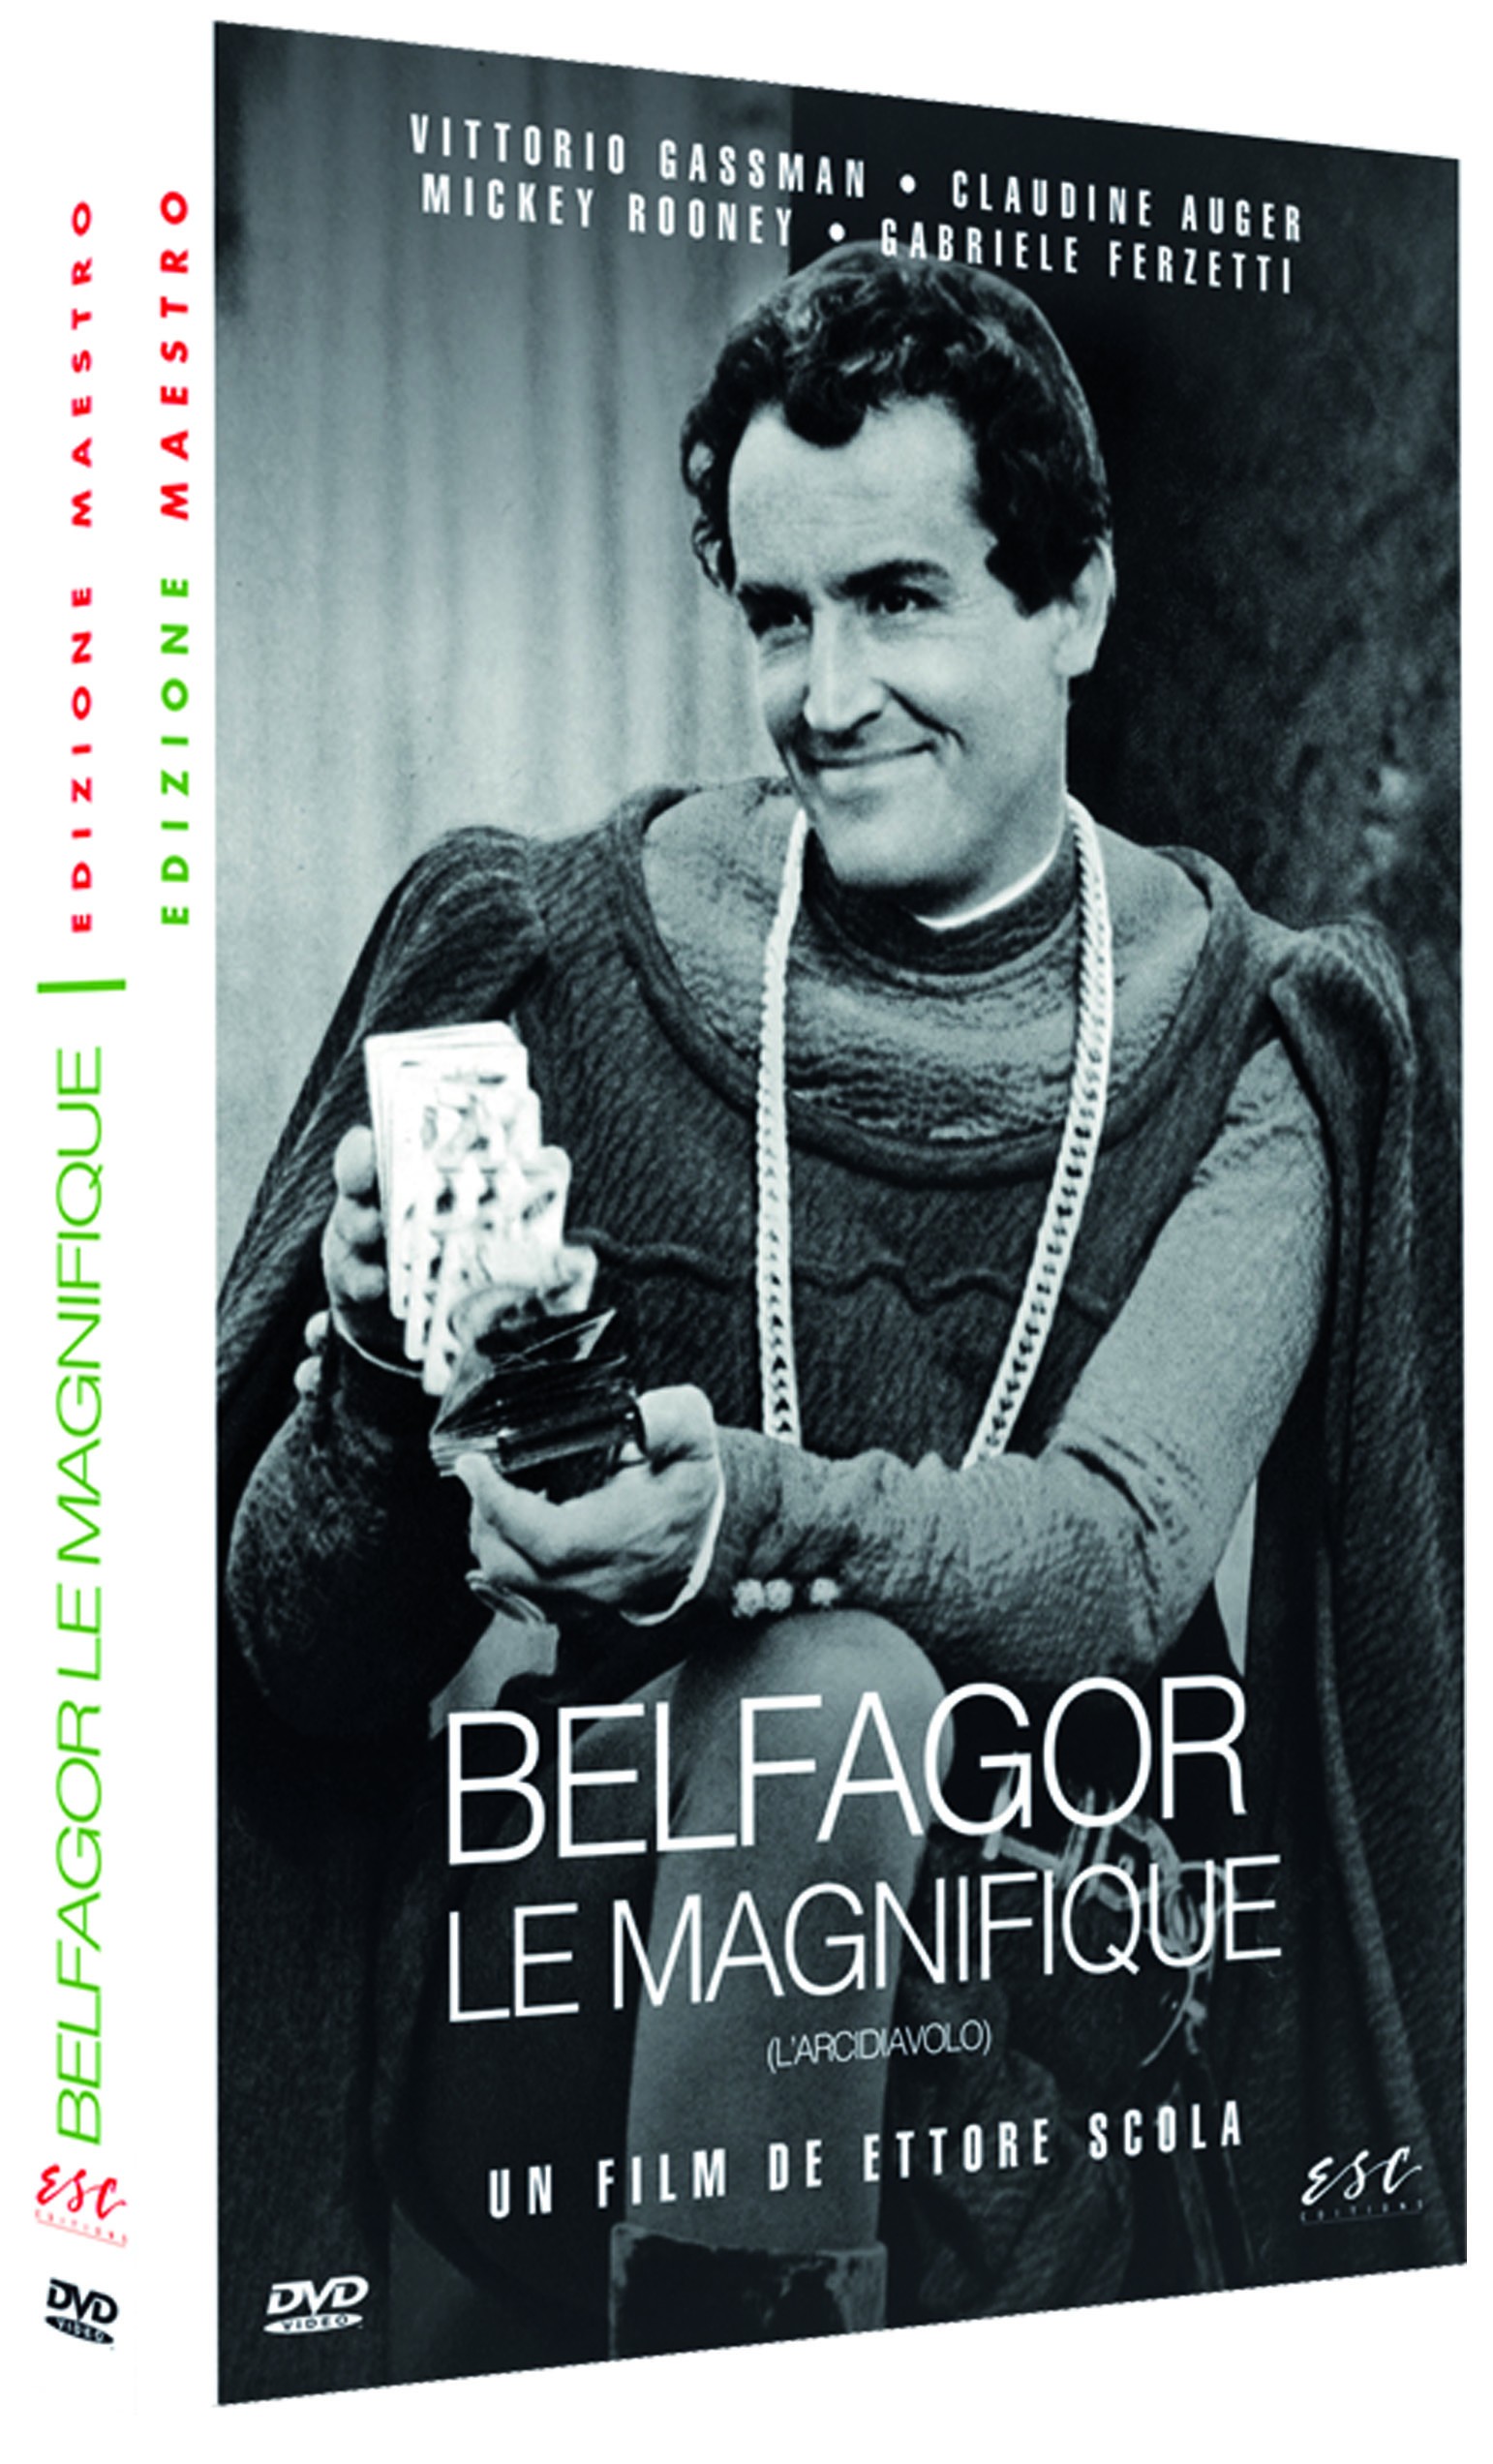 BELFAGOR LE MAGNIFIQUE